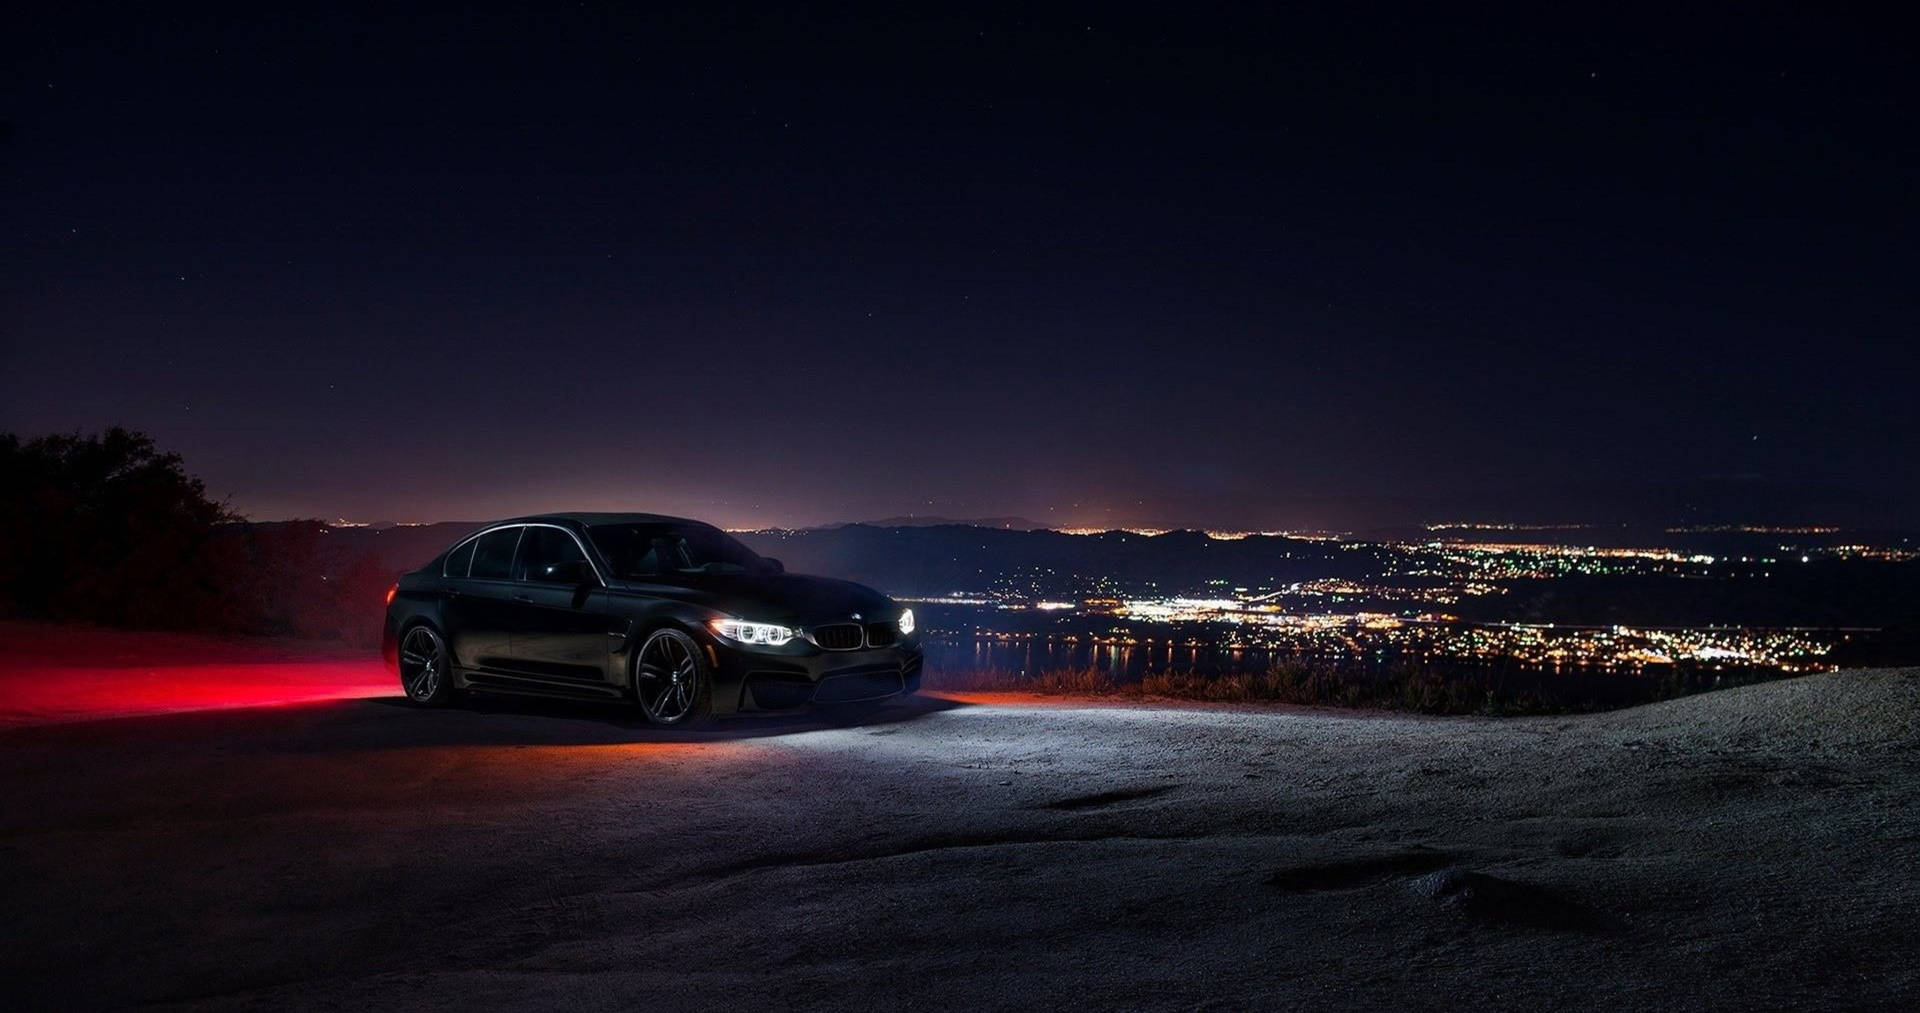 4k Ultra Hd Black Car At Night Background